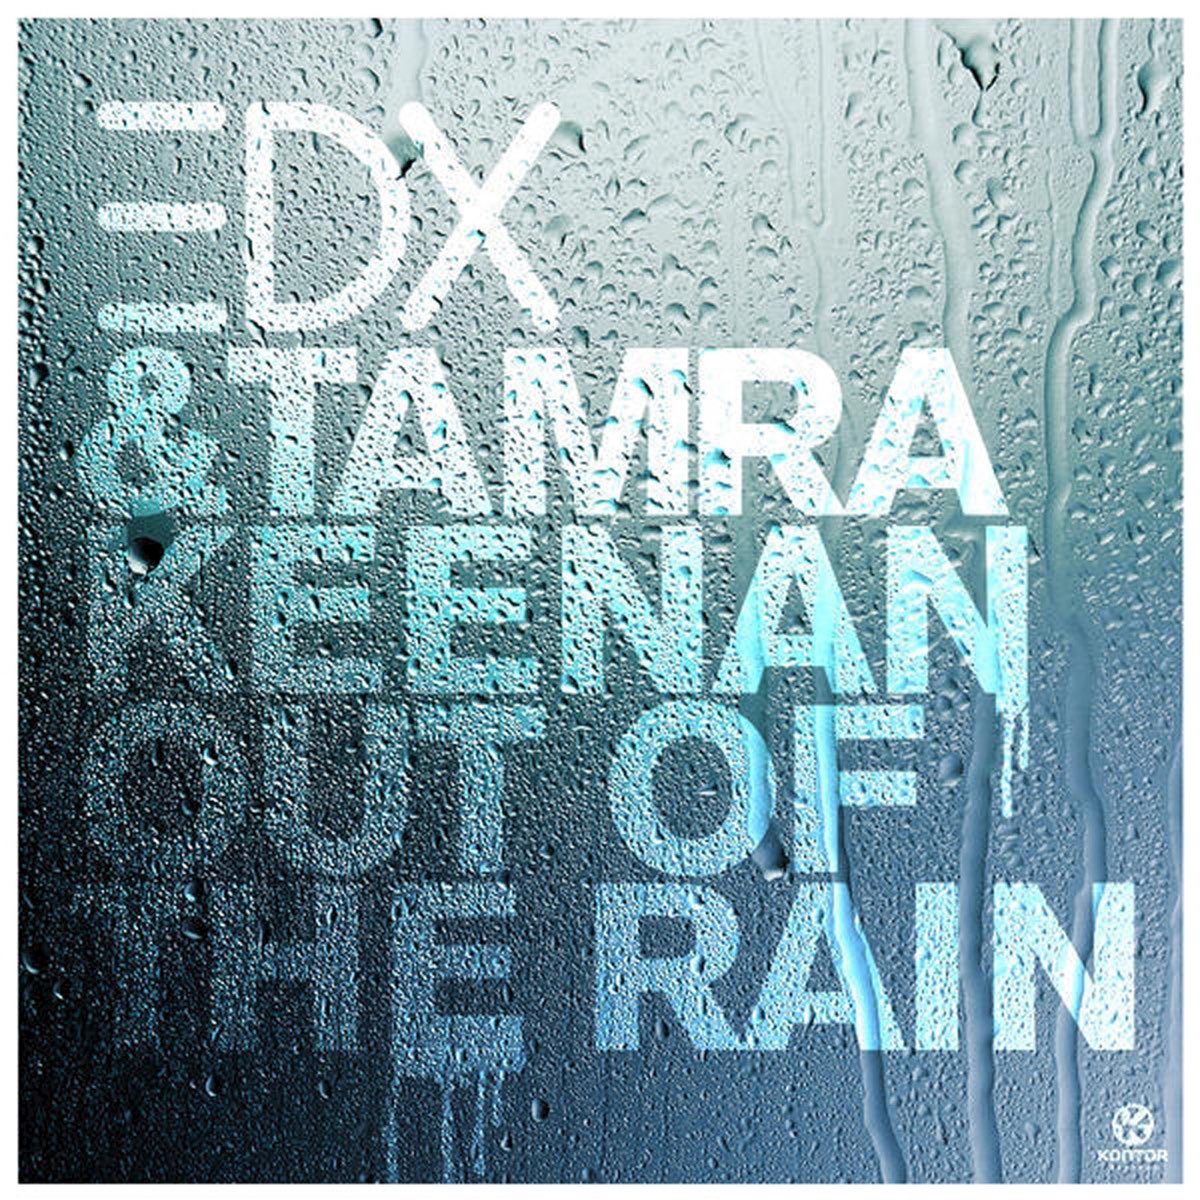 Rain ремикс. The Rain Remix. Rain out. EDX & Tamra Keenan - out of the Rain (Sebastian Krieg Remix). The Rain (feat. Greenspree).